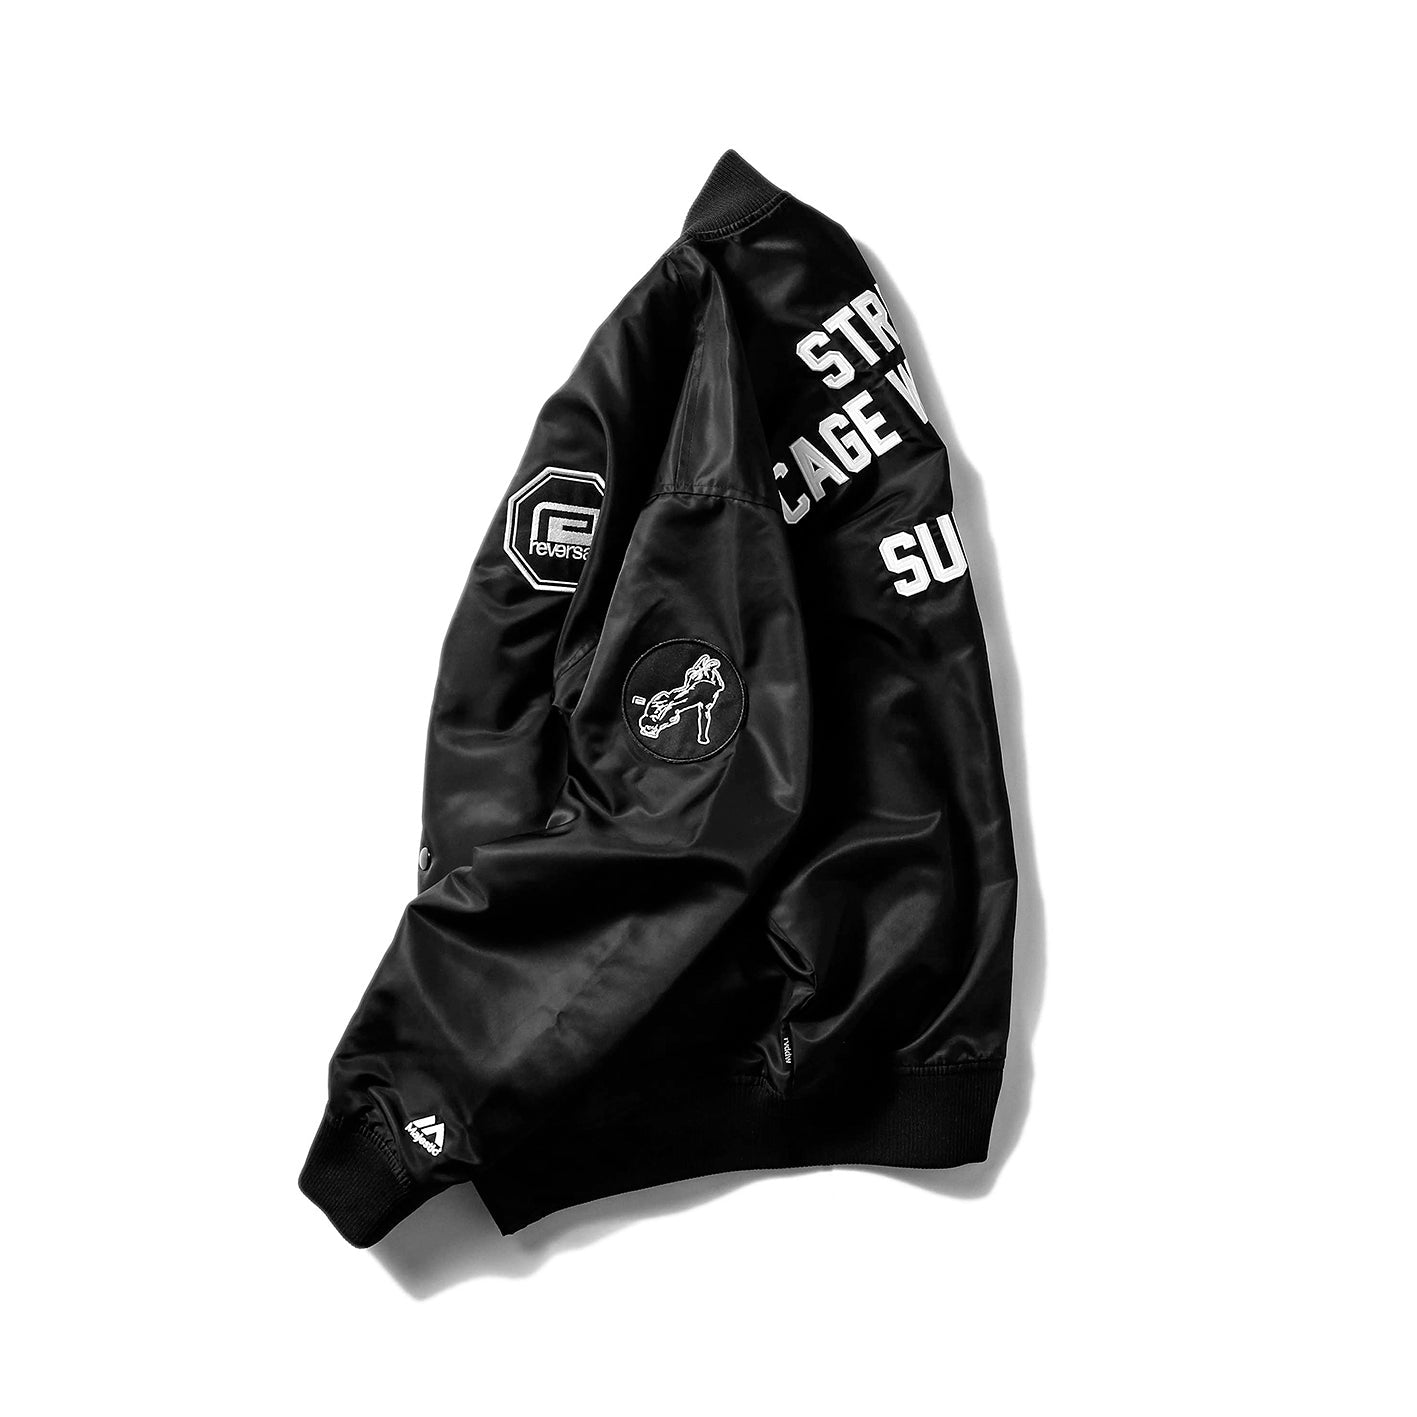 MMA-Inspired Black Satin Stadium Jacket - Style & Durability Combined